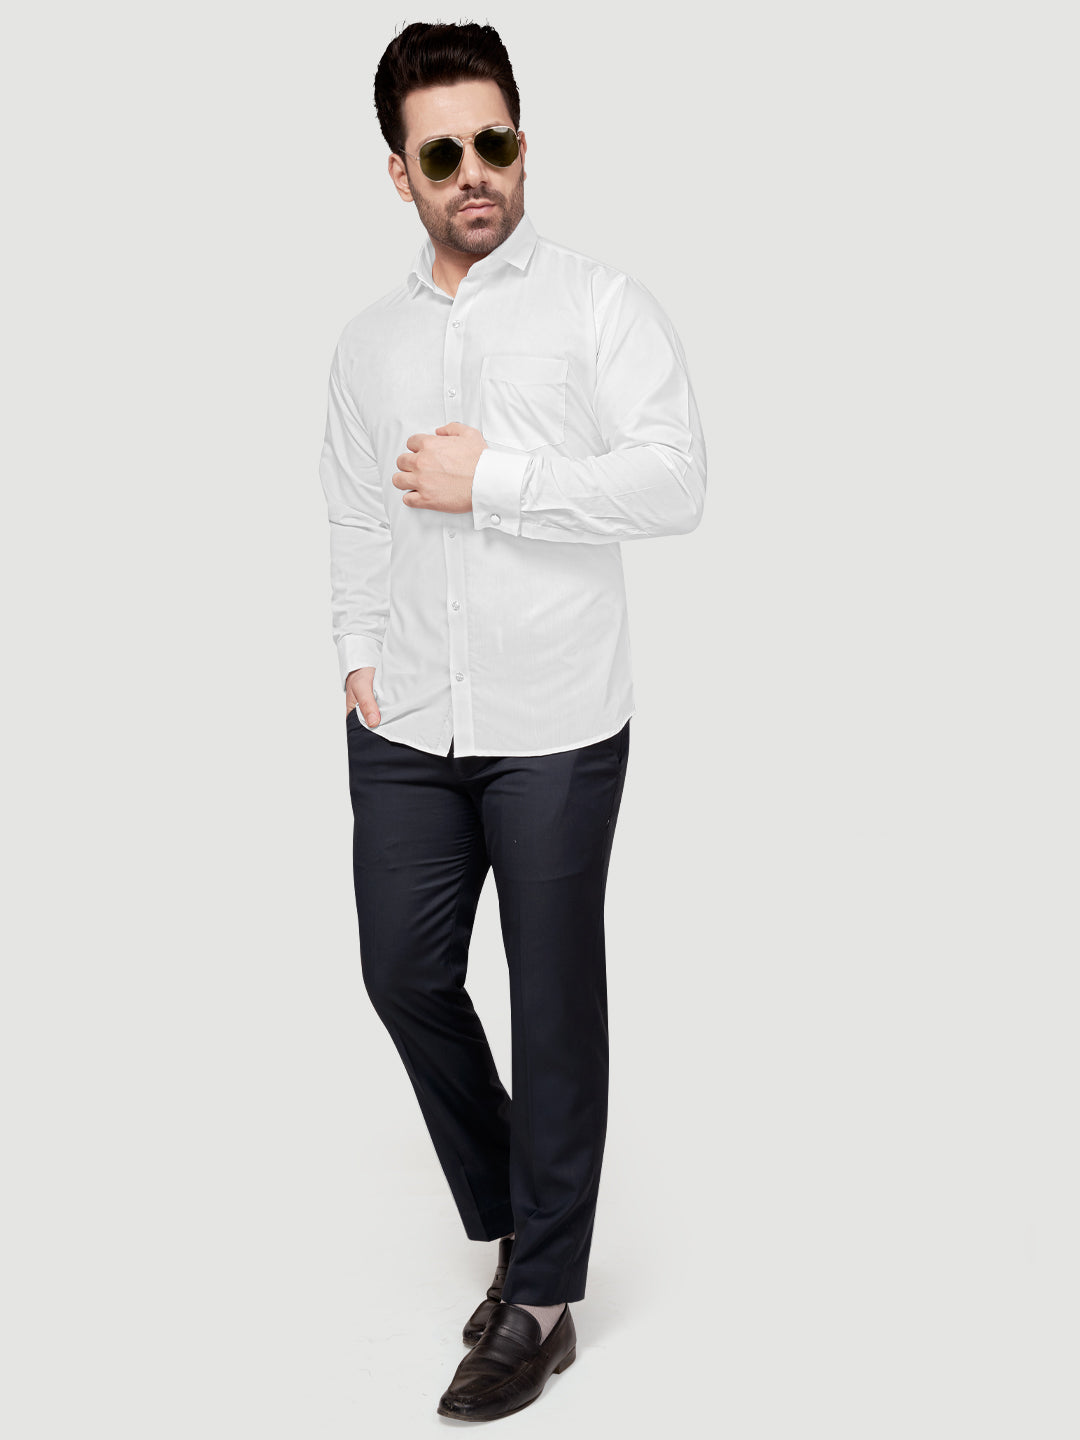 Black & White Men's Formal Cufflink Shirt White